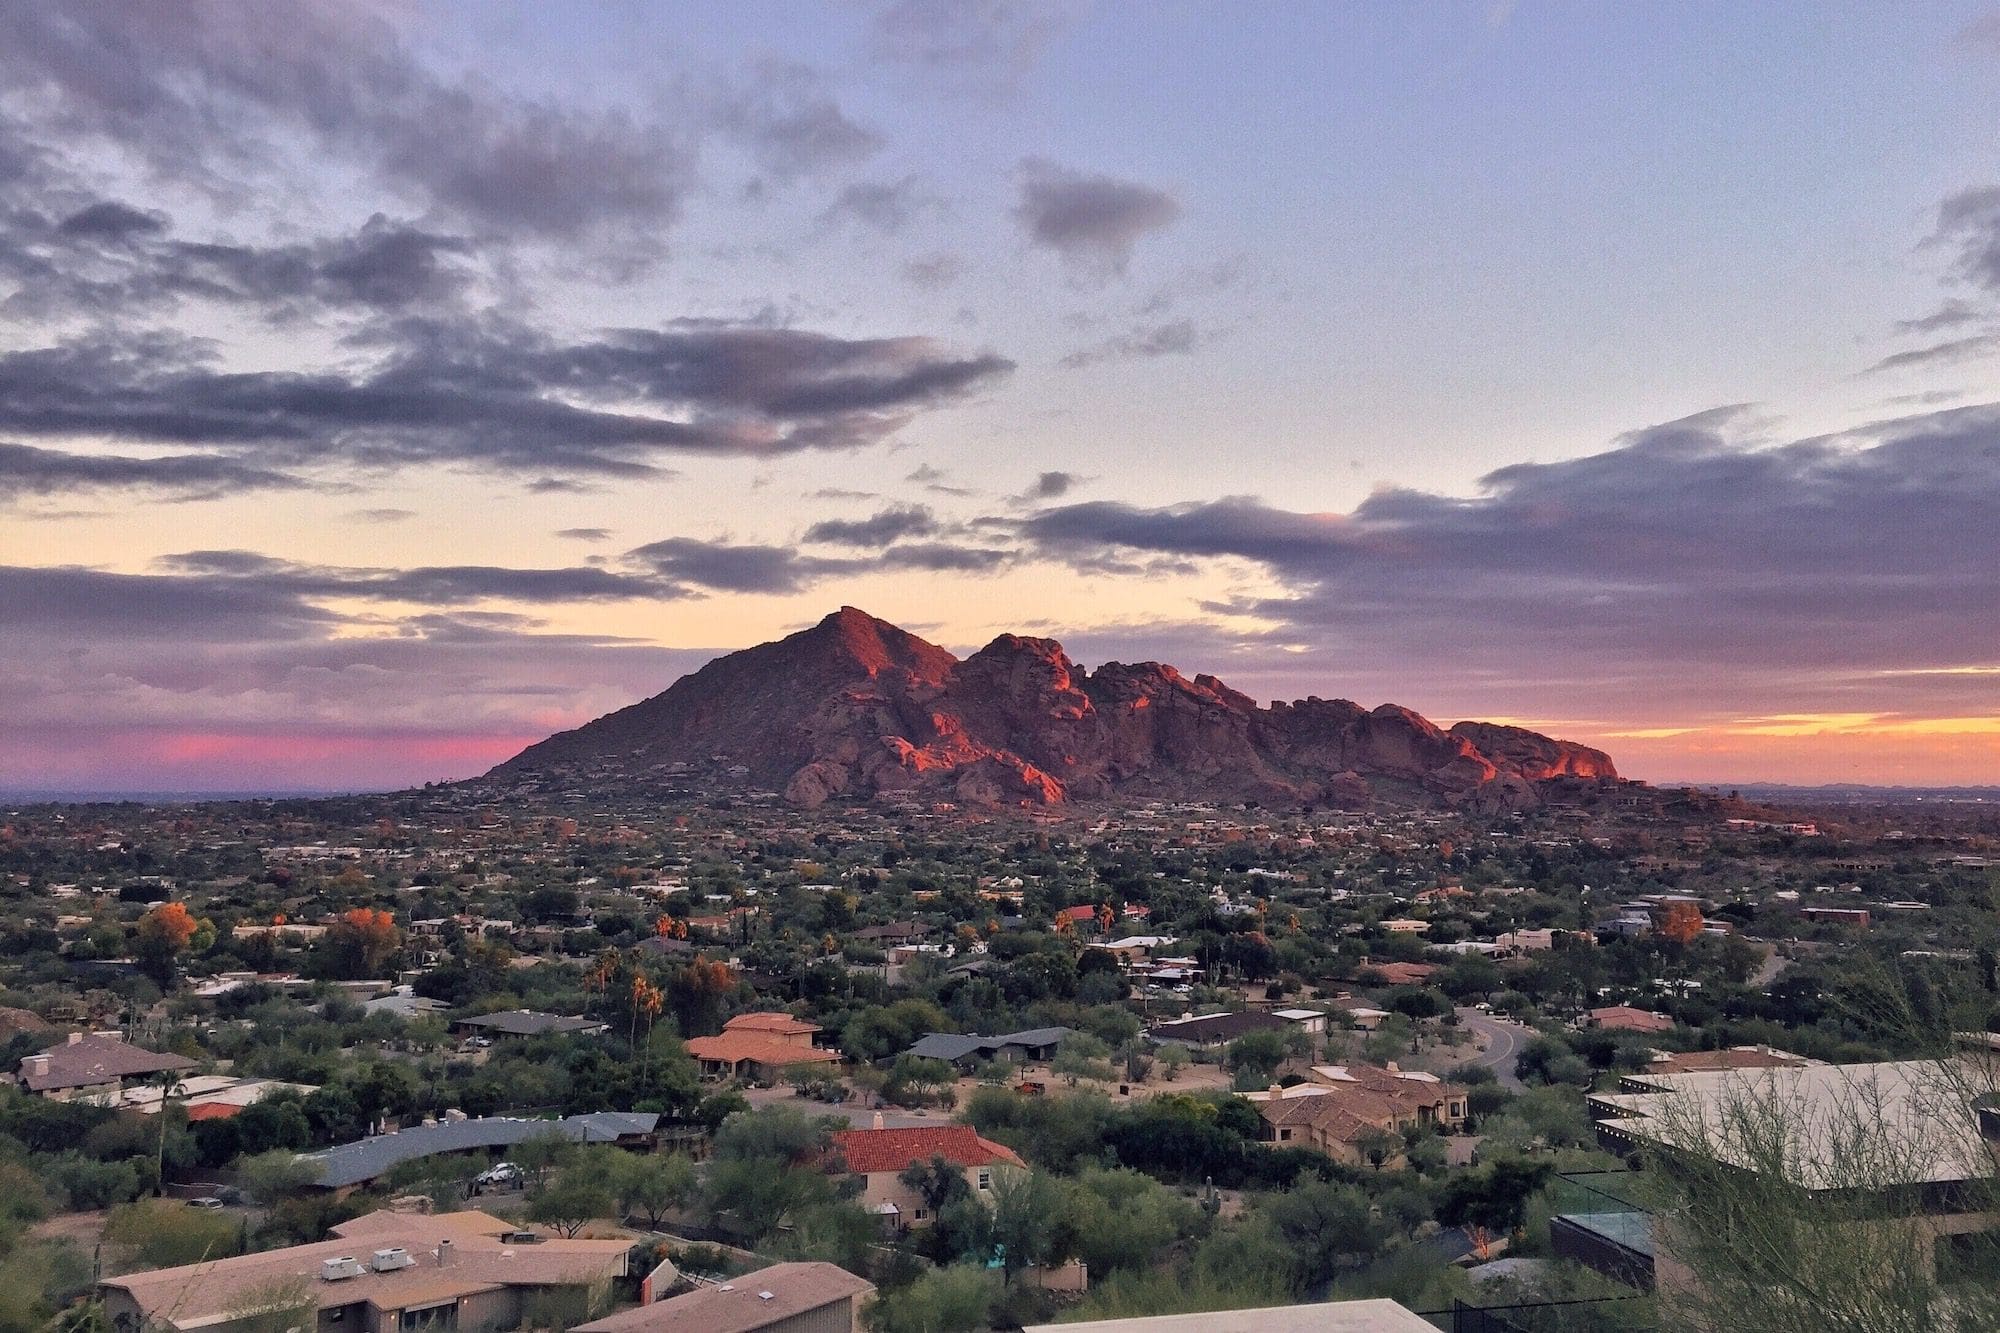 Camelback Mountain located in Phoenix, Arizona